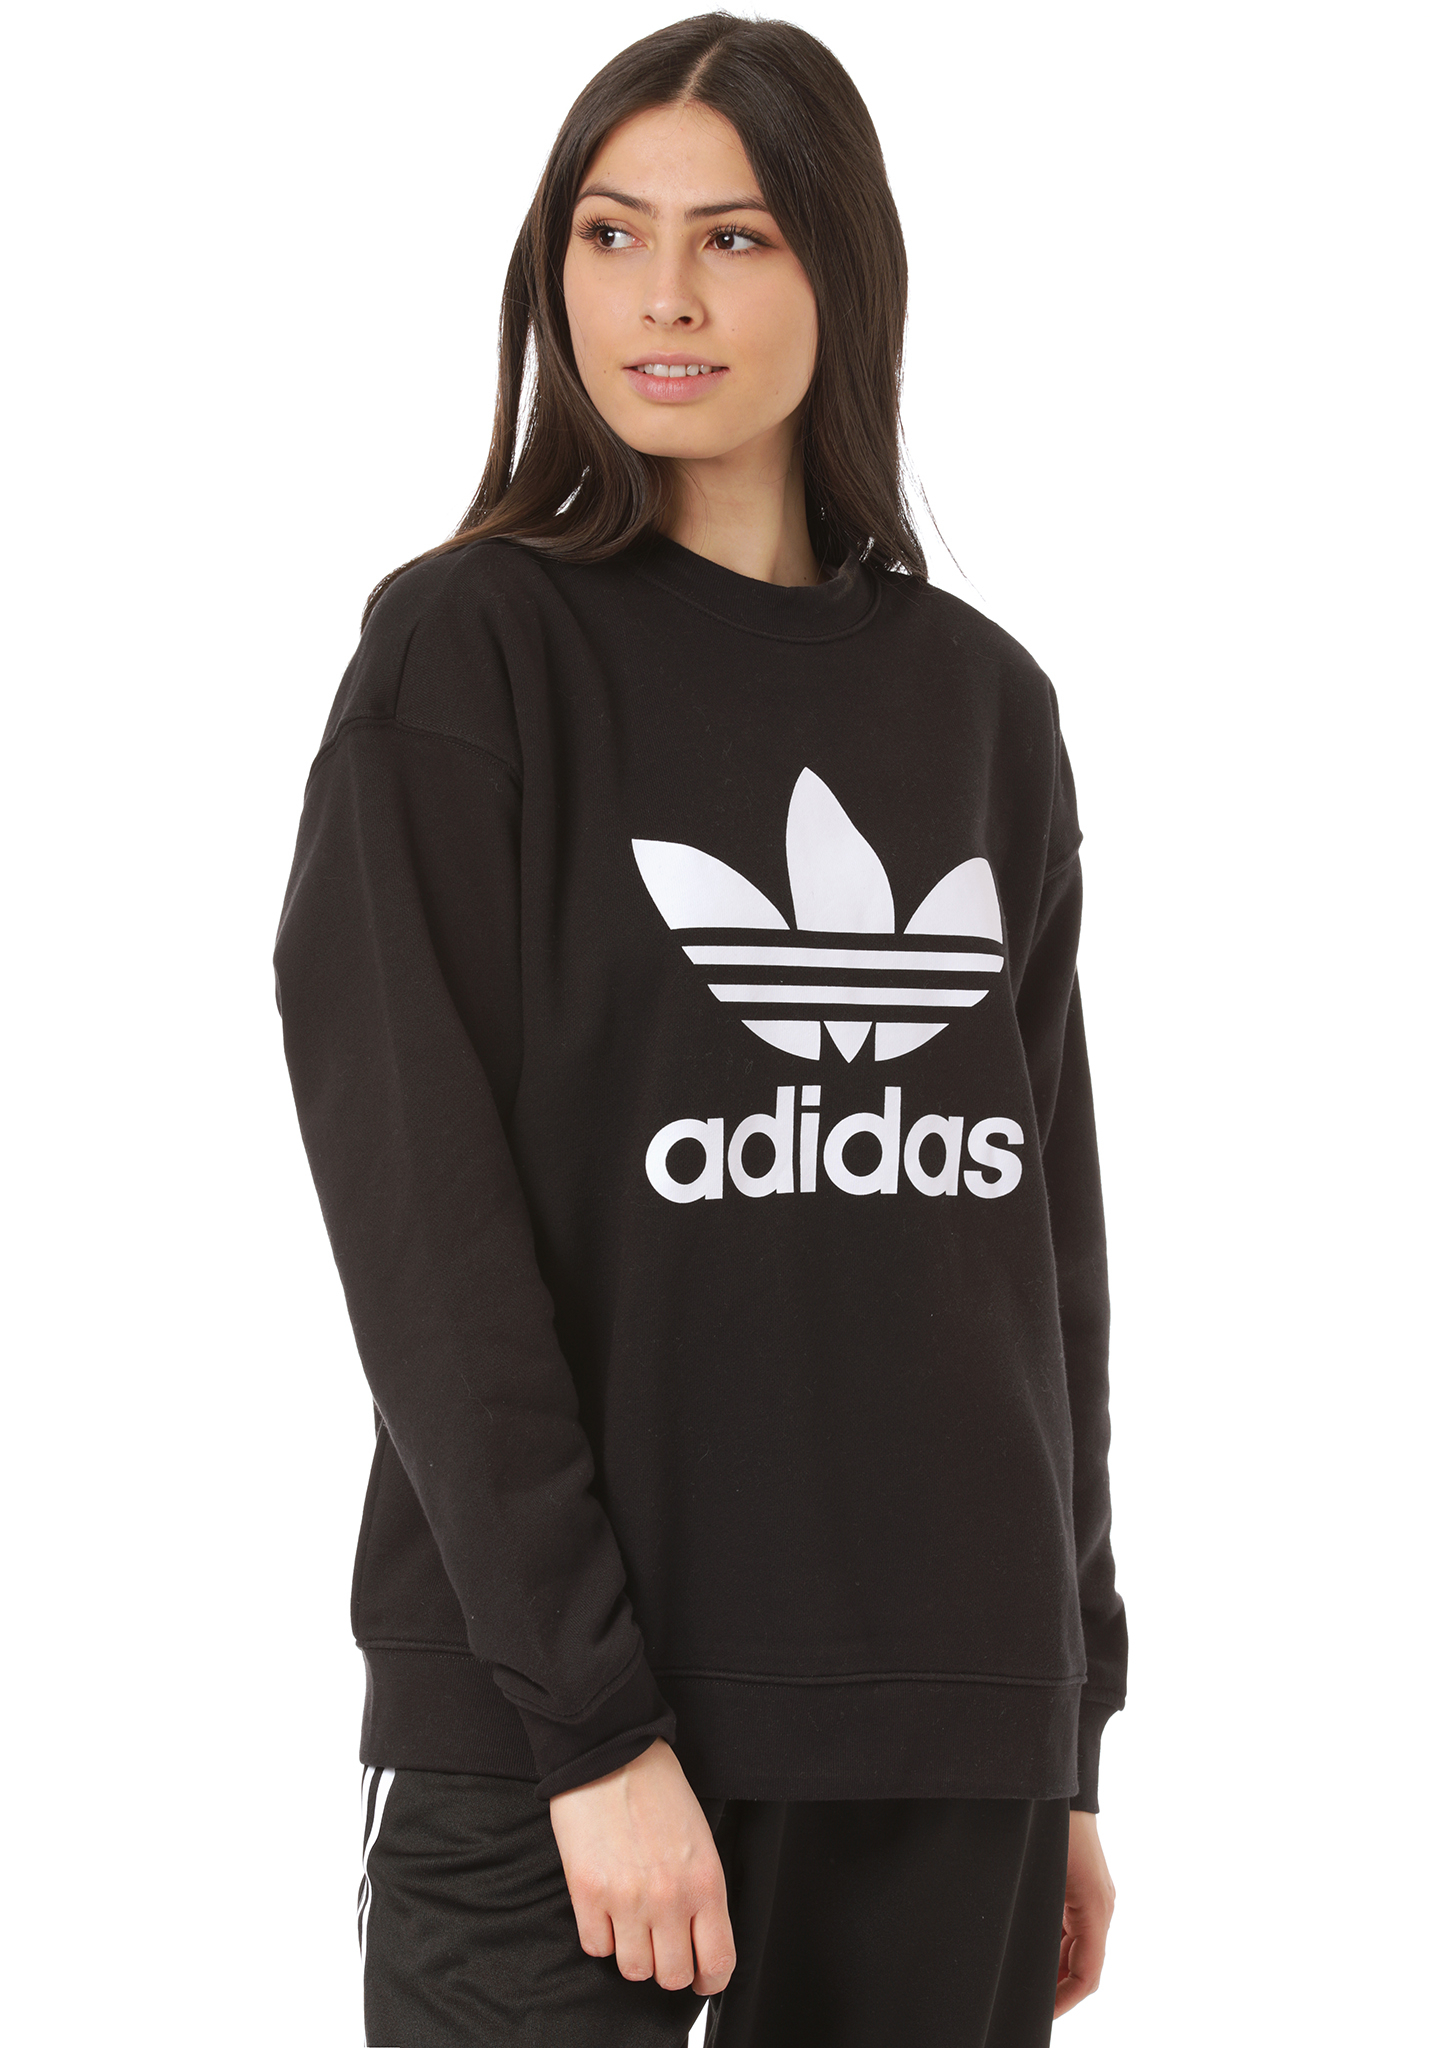 Adidas Originals Trefoil Crew Sweatshirts black-white 32